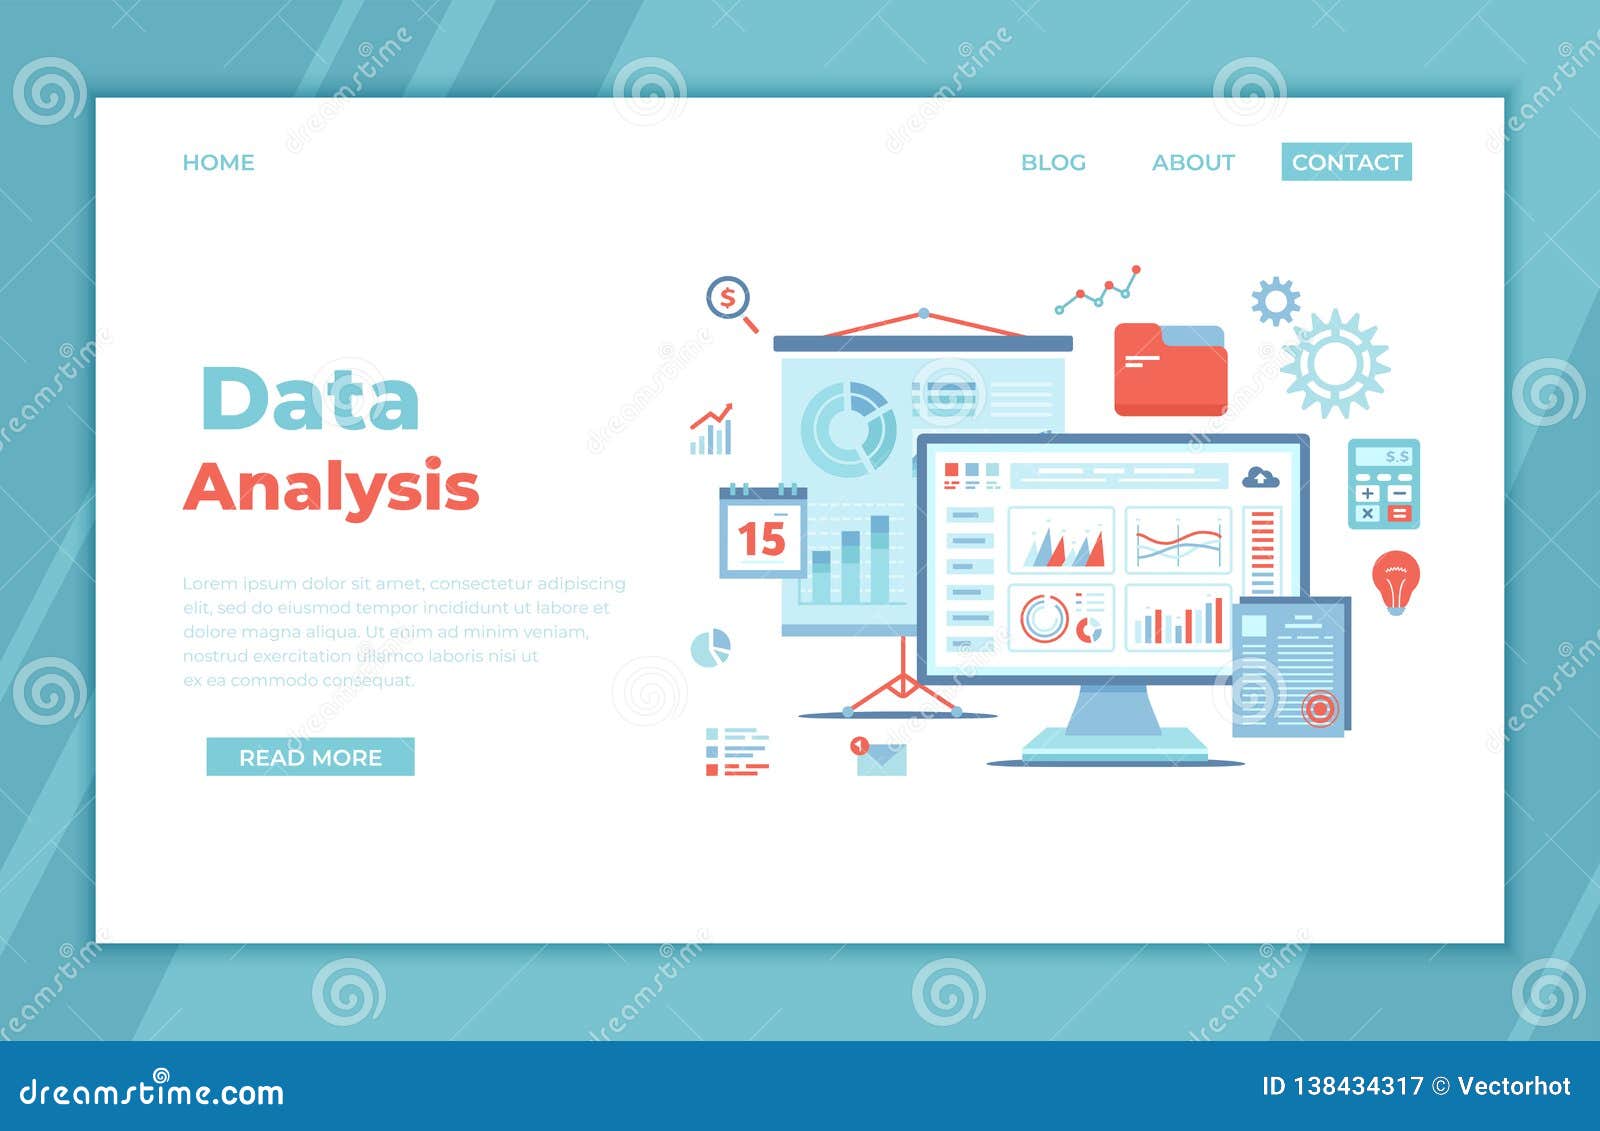 Data Analysis Charts And Graphs